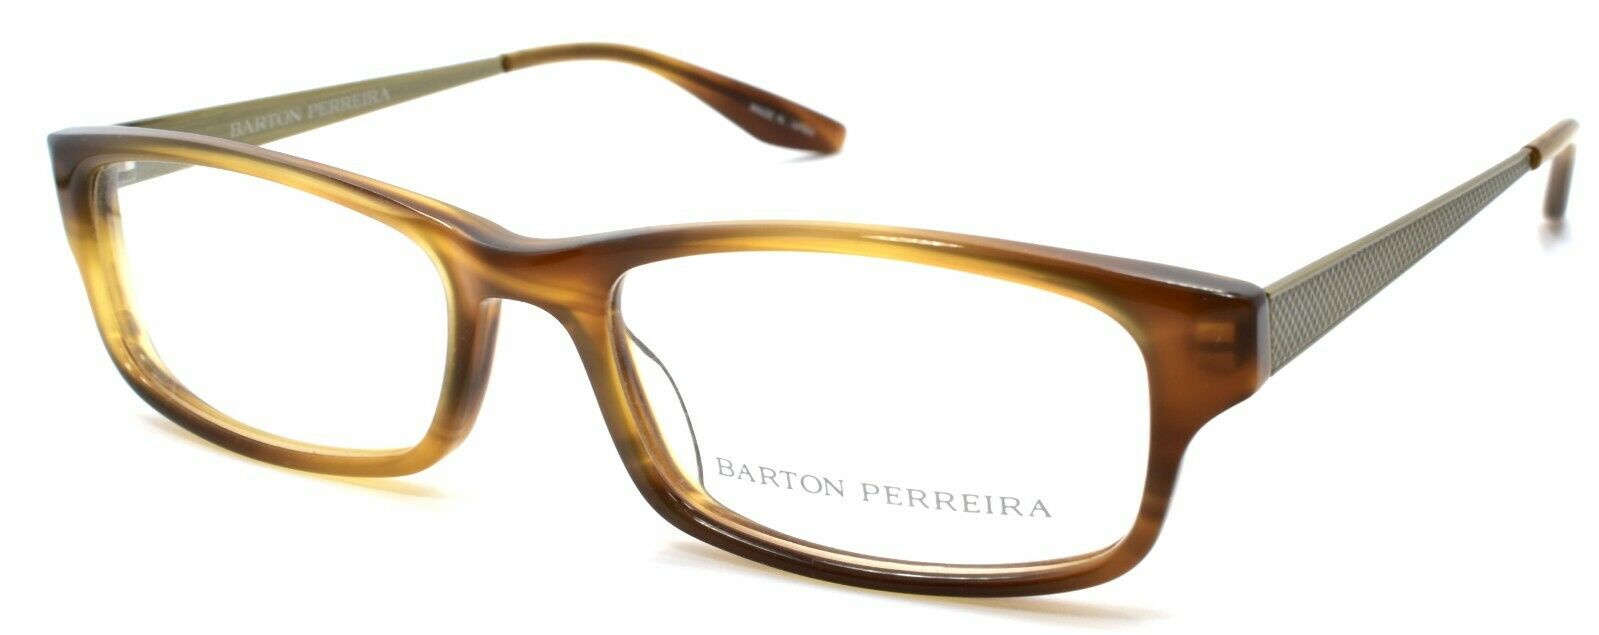 1-Barton Perreira Nickelas Men's Eyeglasses Frames 53-17-145 Umber Tortoise-672263039051-IKSpecs